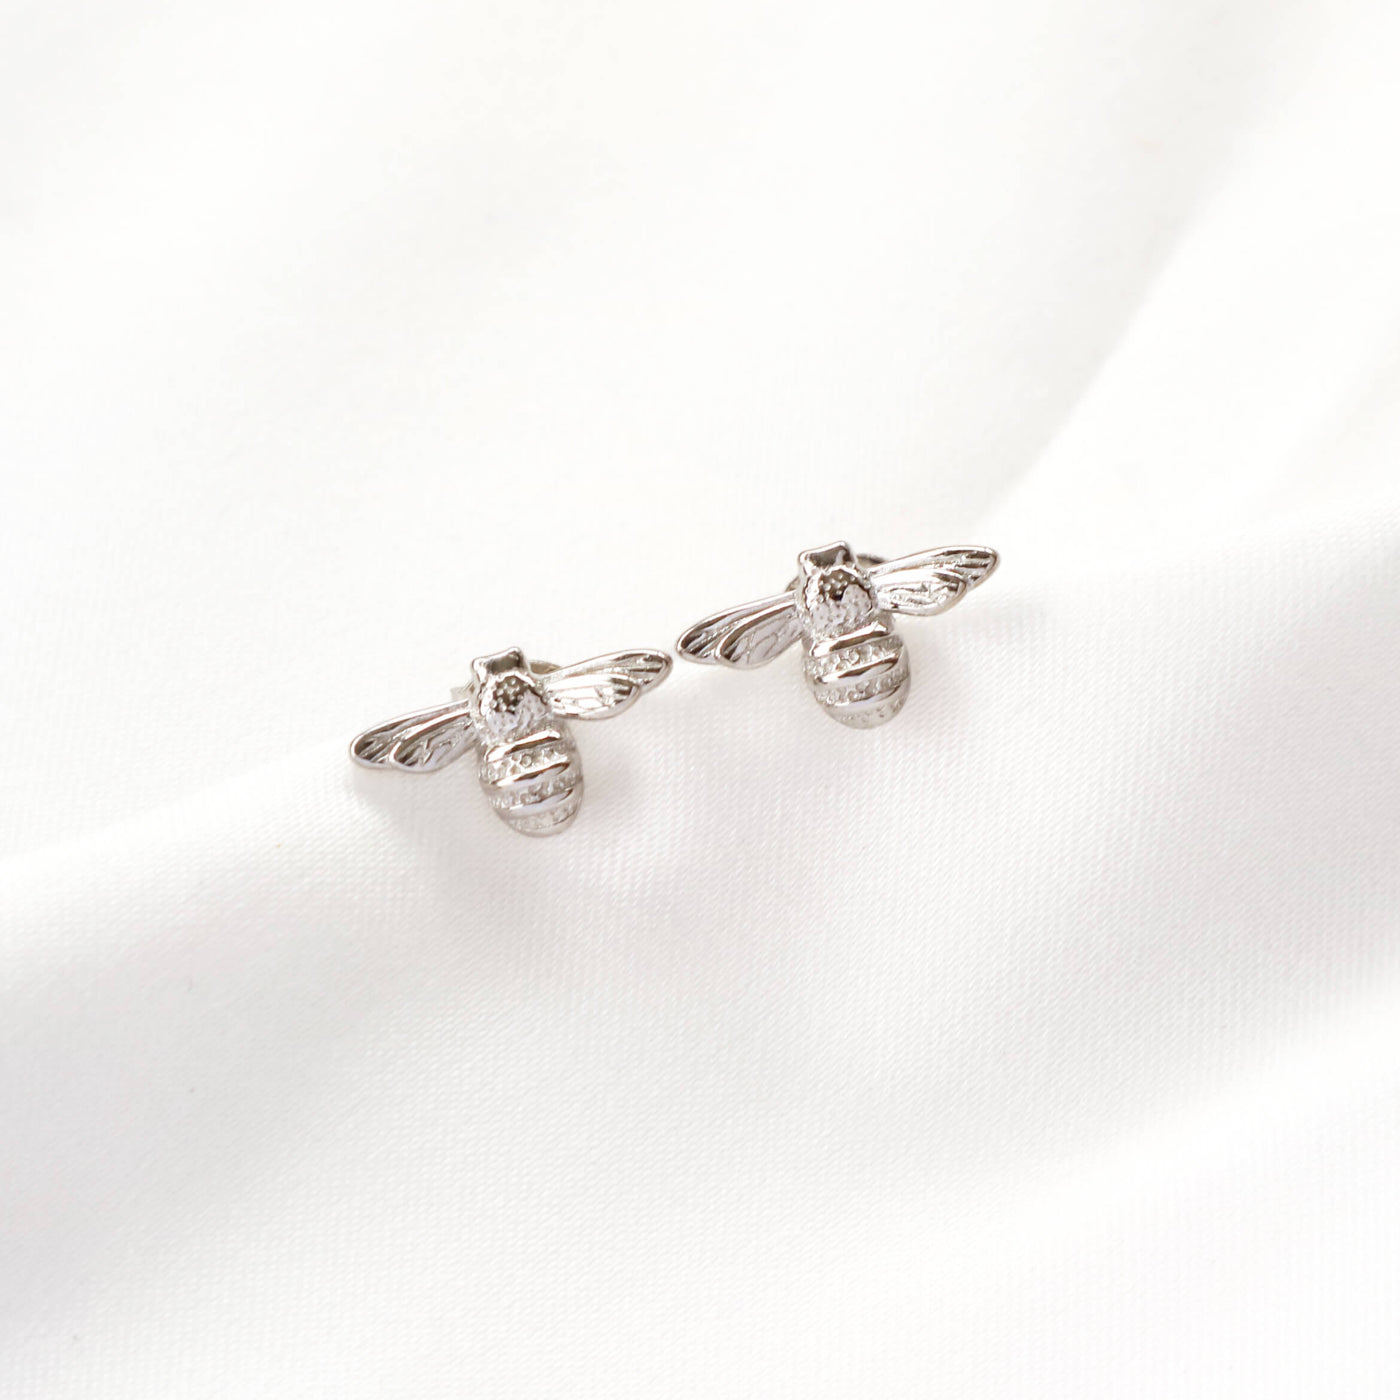 Queen bumble bee silver stud earrings, Rani & Co. jewellery